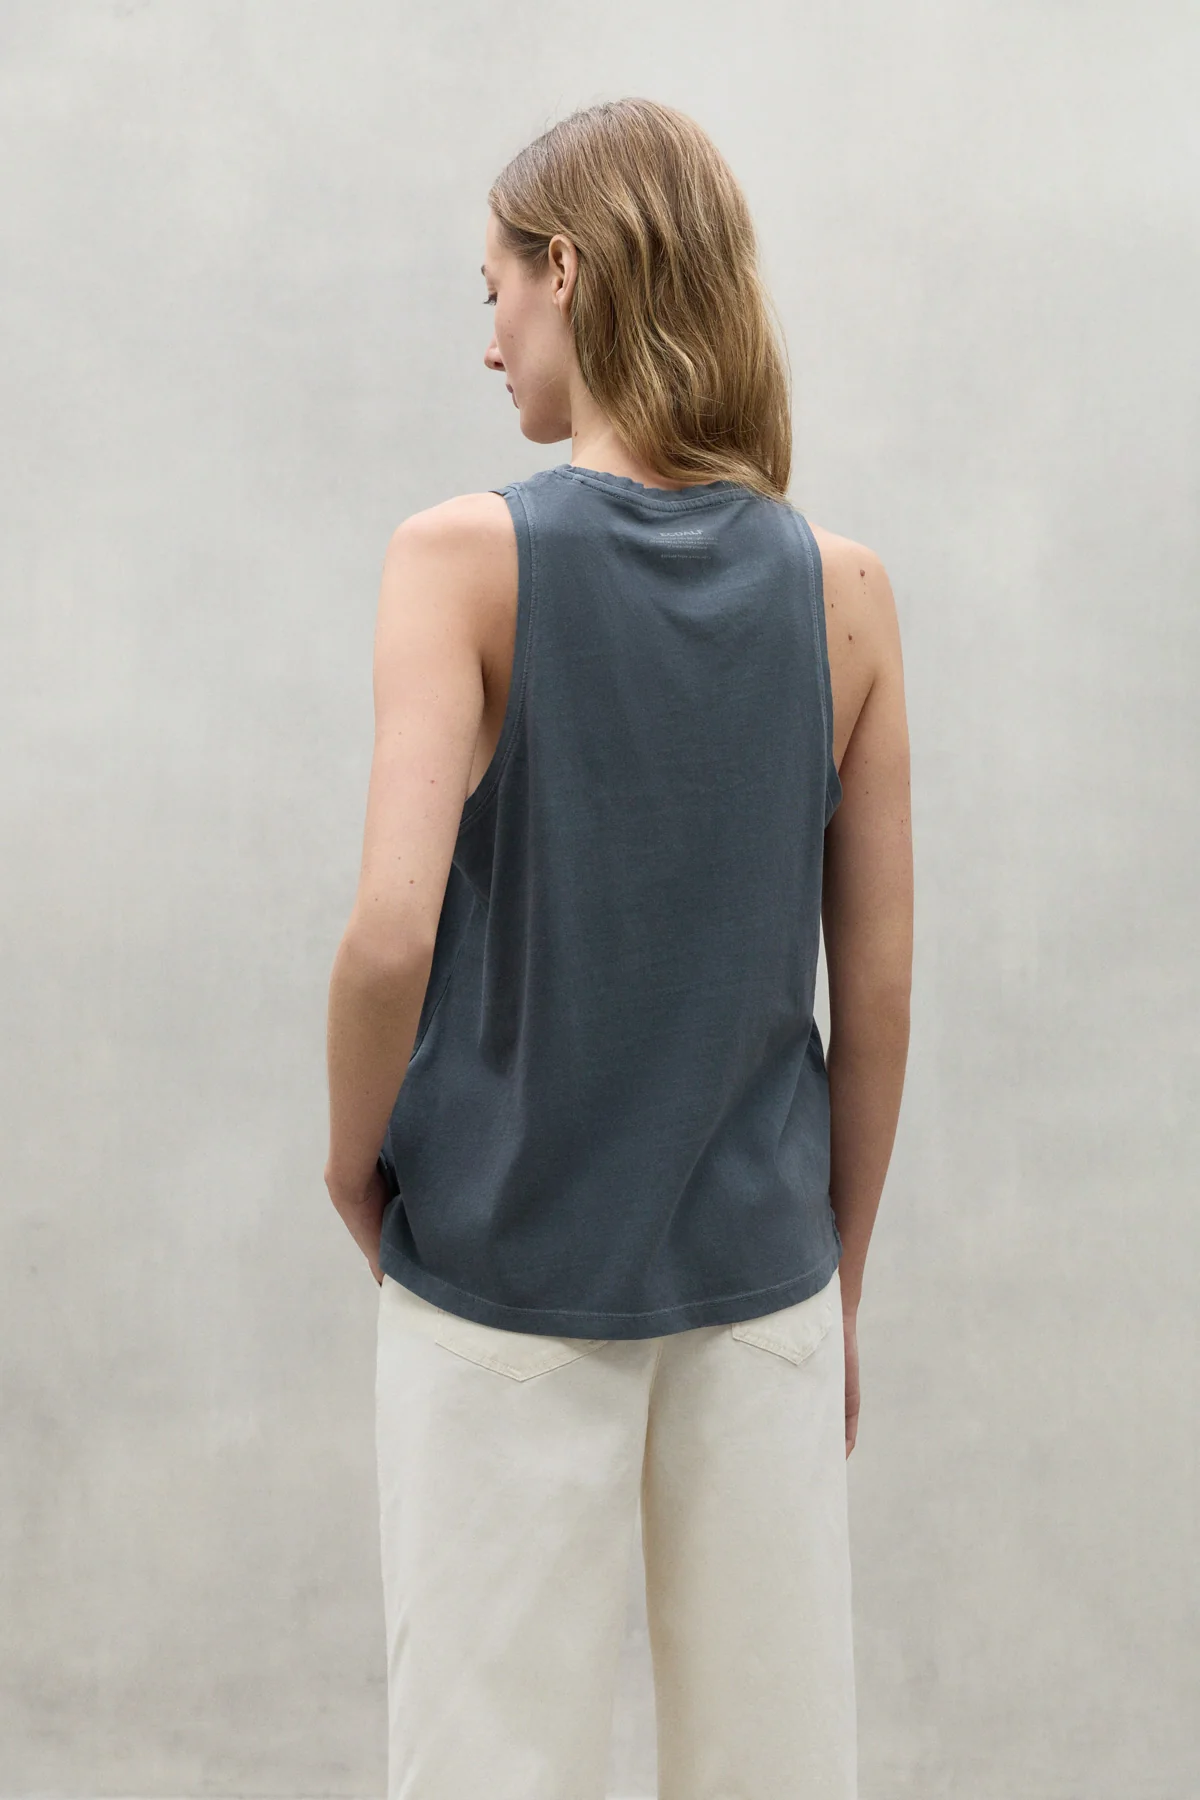 ECOALF camiseta sin mangas color gris - 2